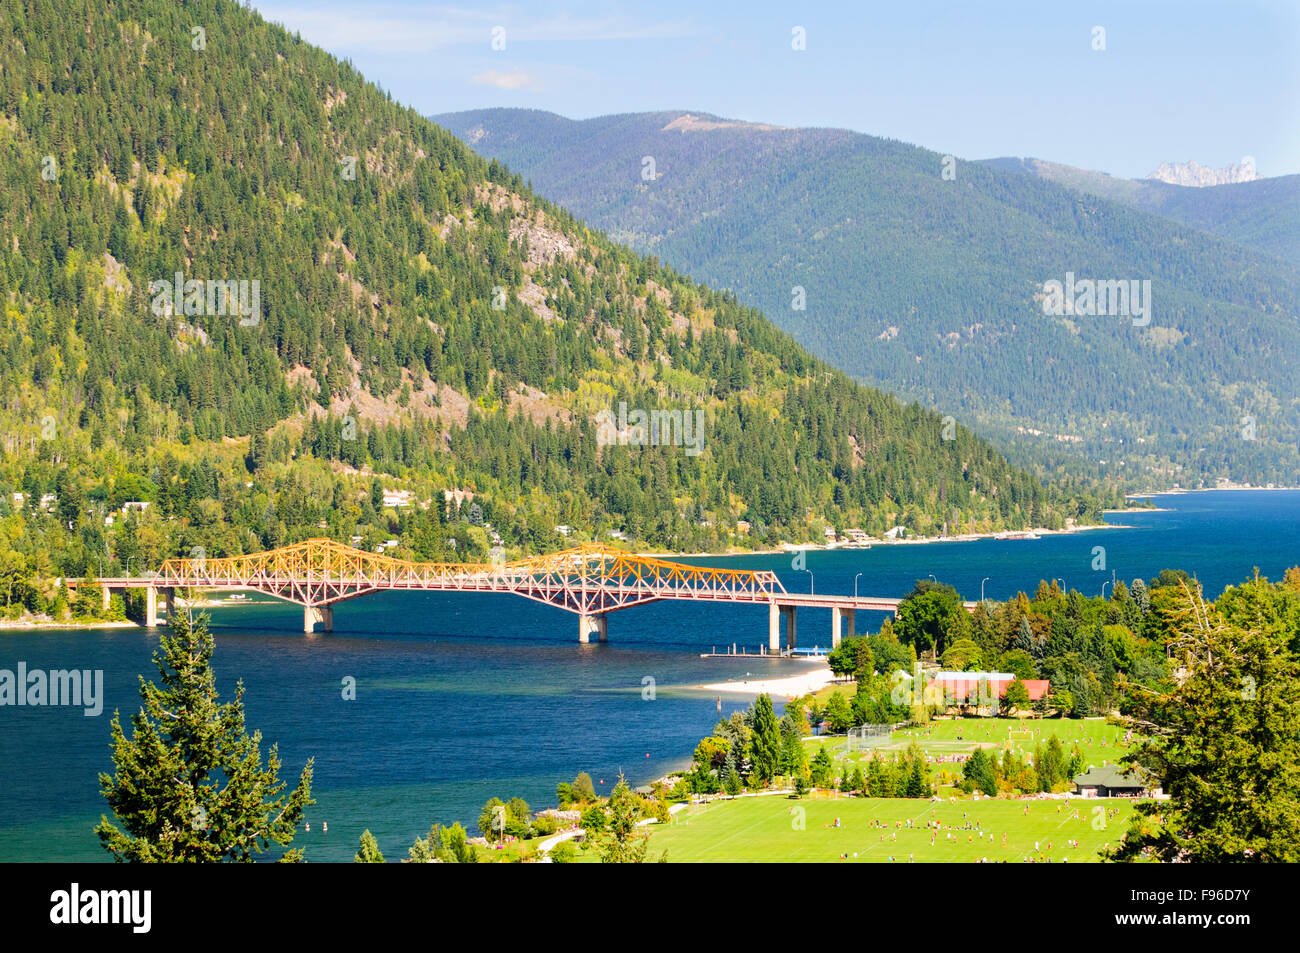 The Big Orange Bridge spanning Kootenay Lake in Nelson, British Columbia. Stock Photo